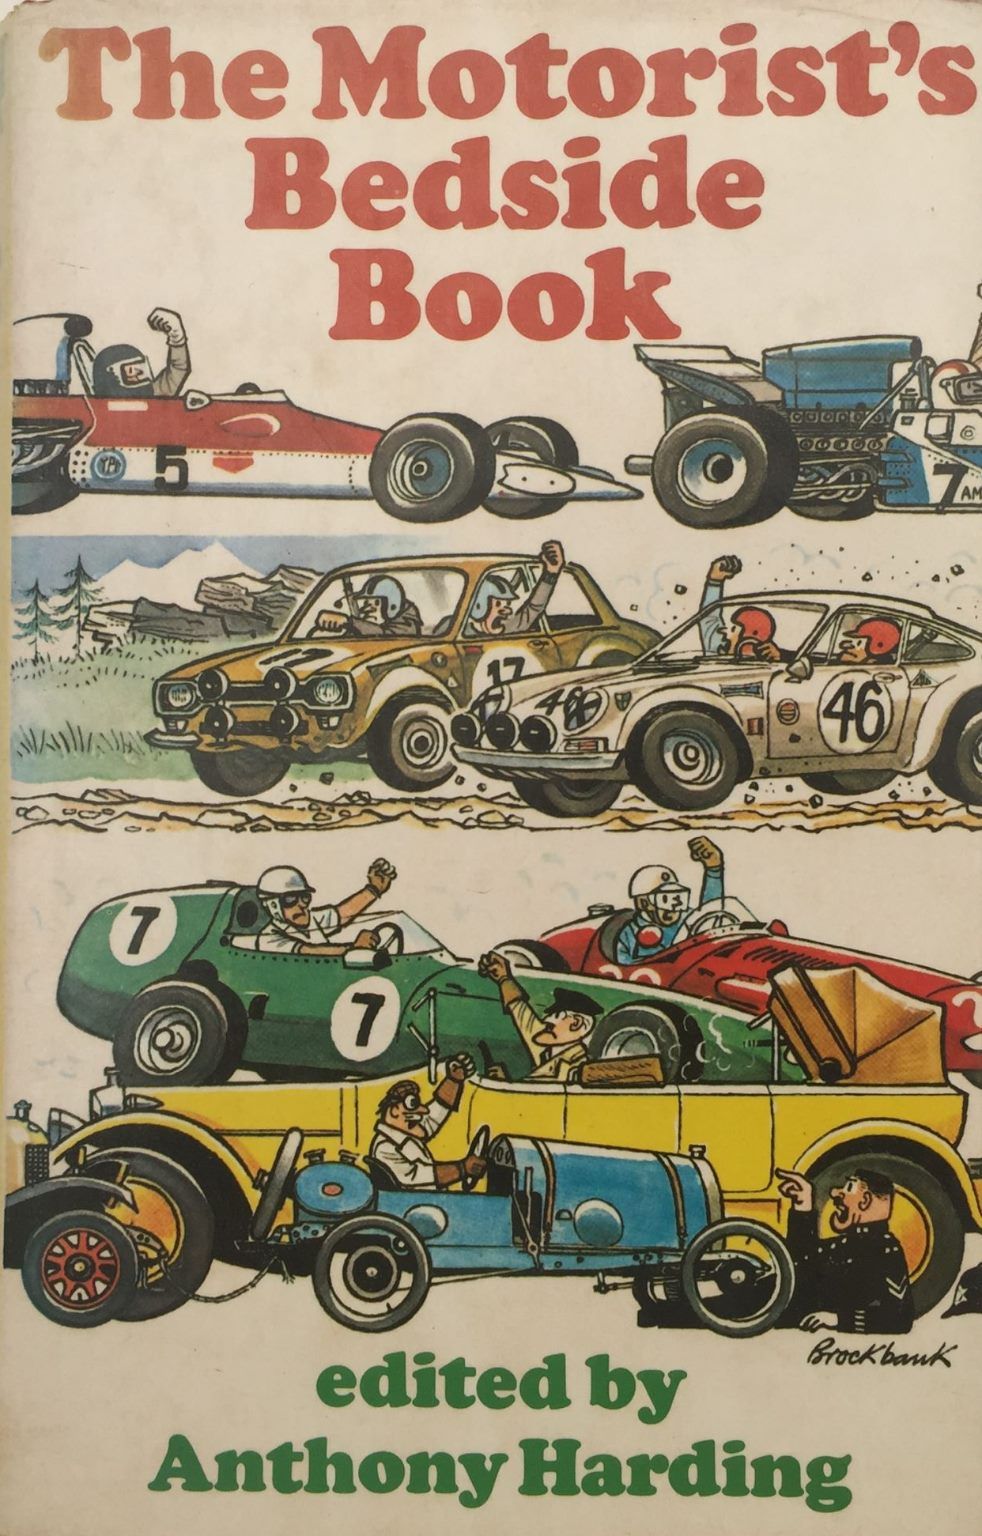 The Motorist's Bedside Book